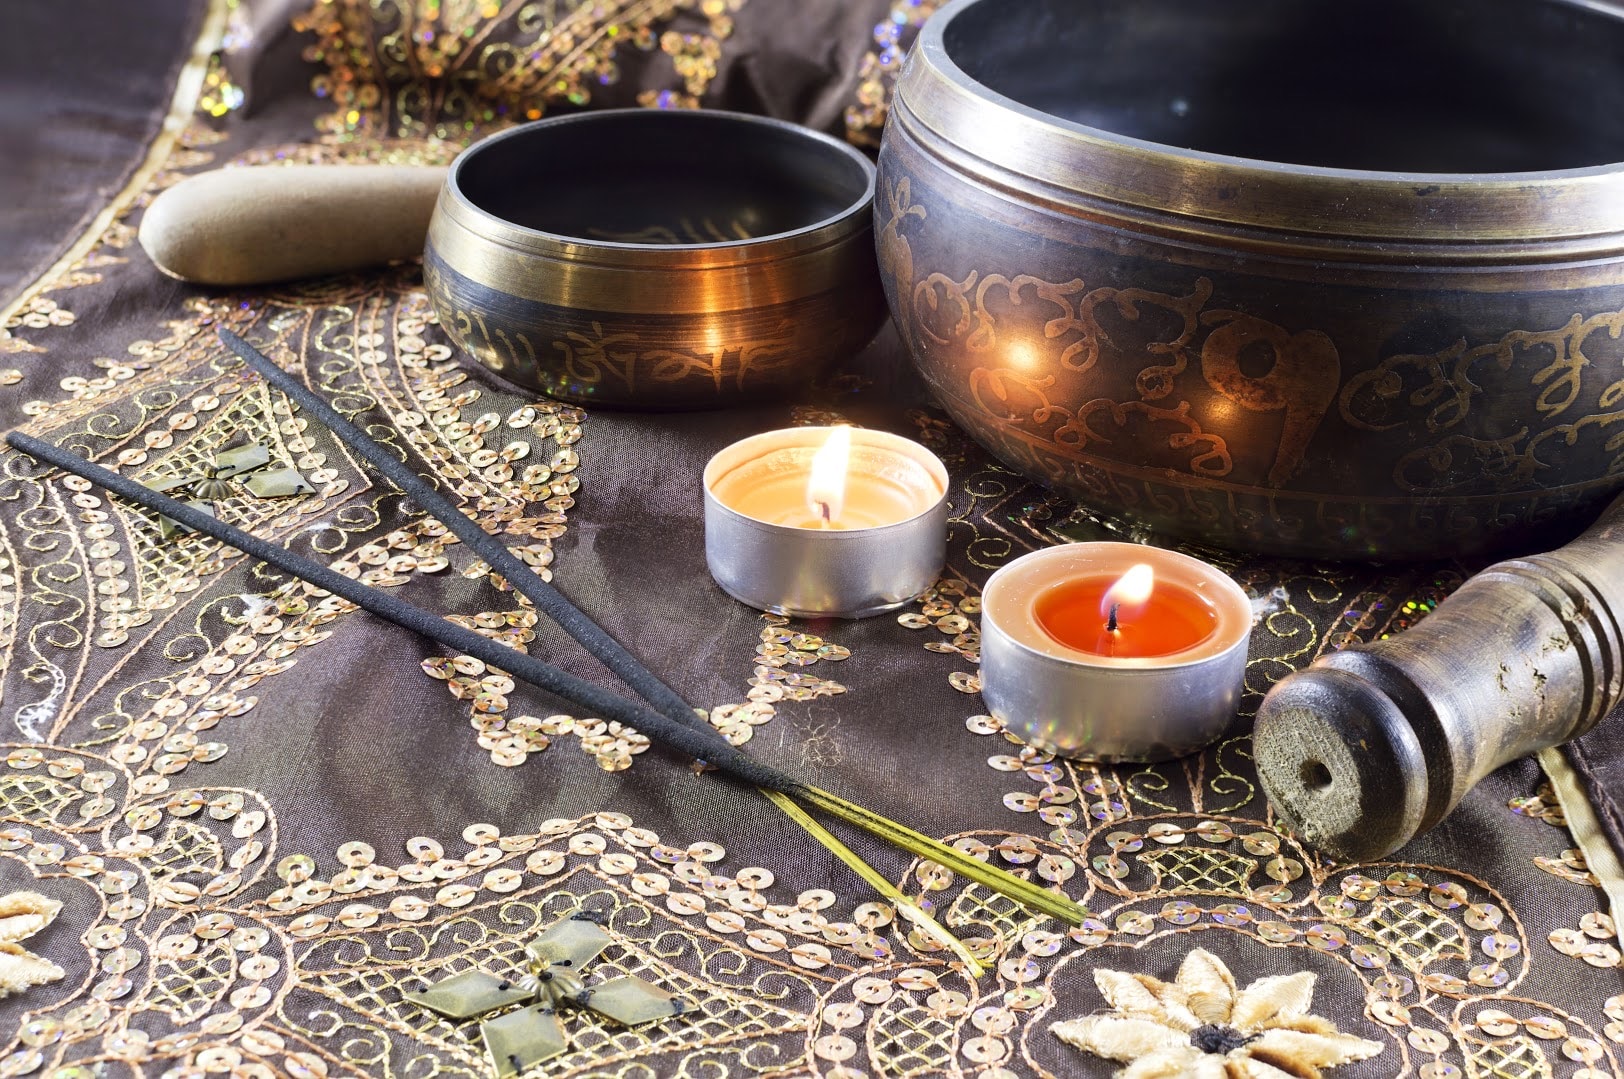 Tibetan bowls and candles